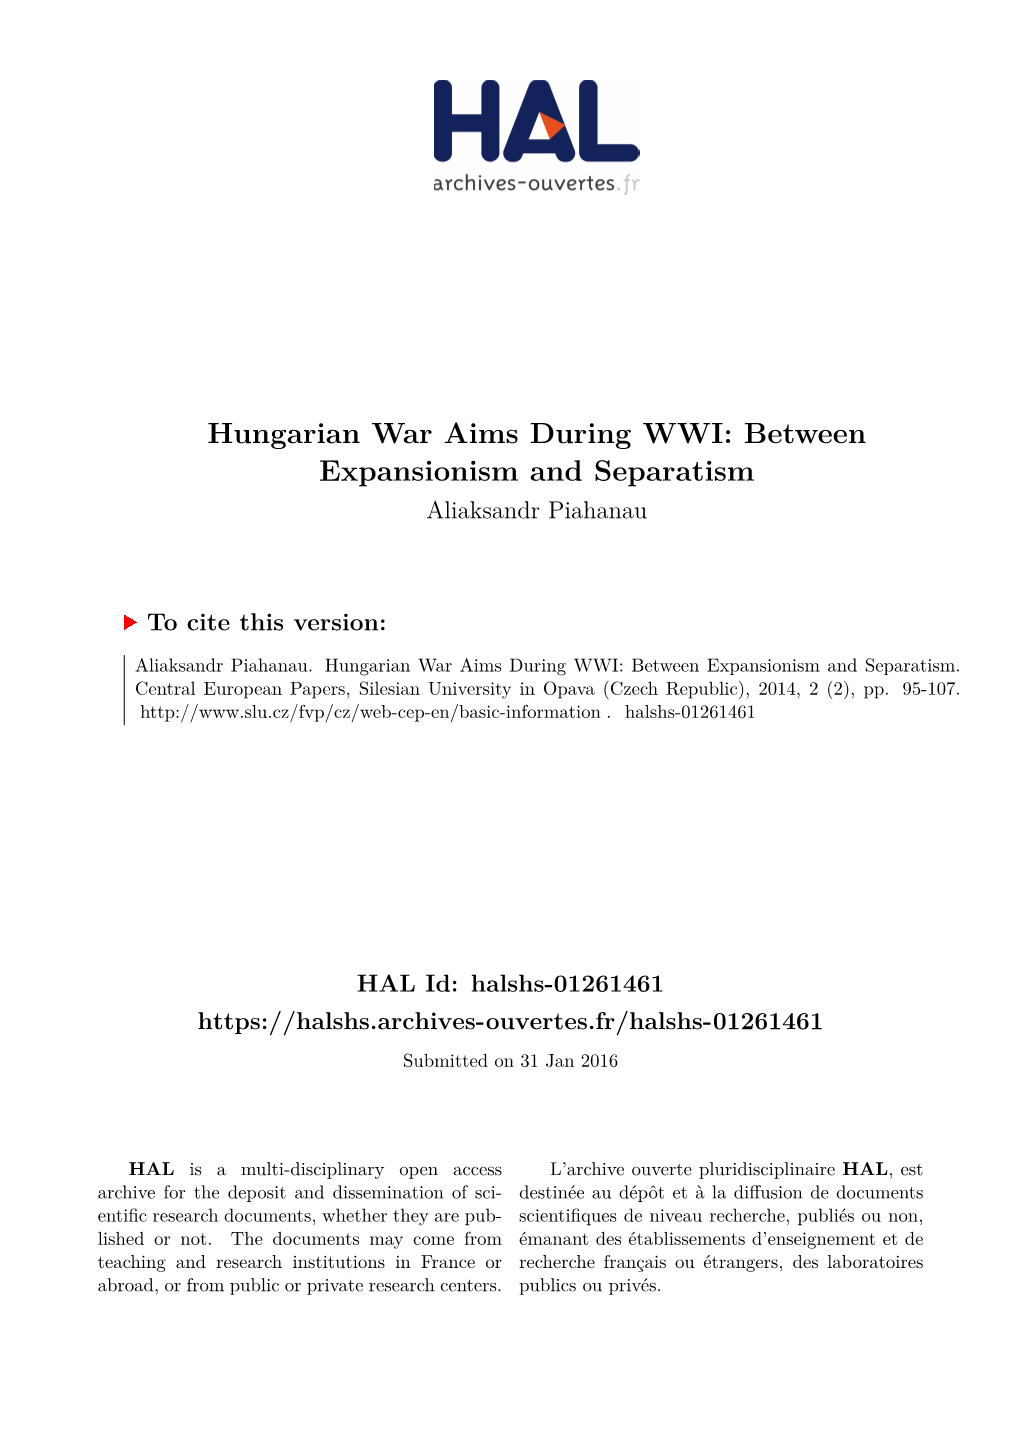 Hungarian War Aims During WWI: Between Expansionism and Separatism Aliaksandr Piahanau